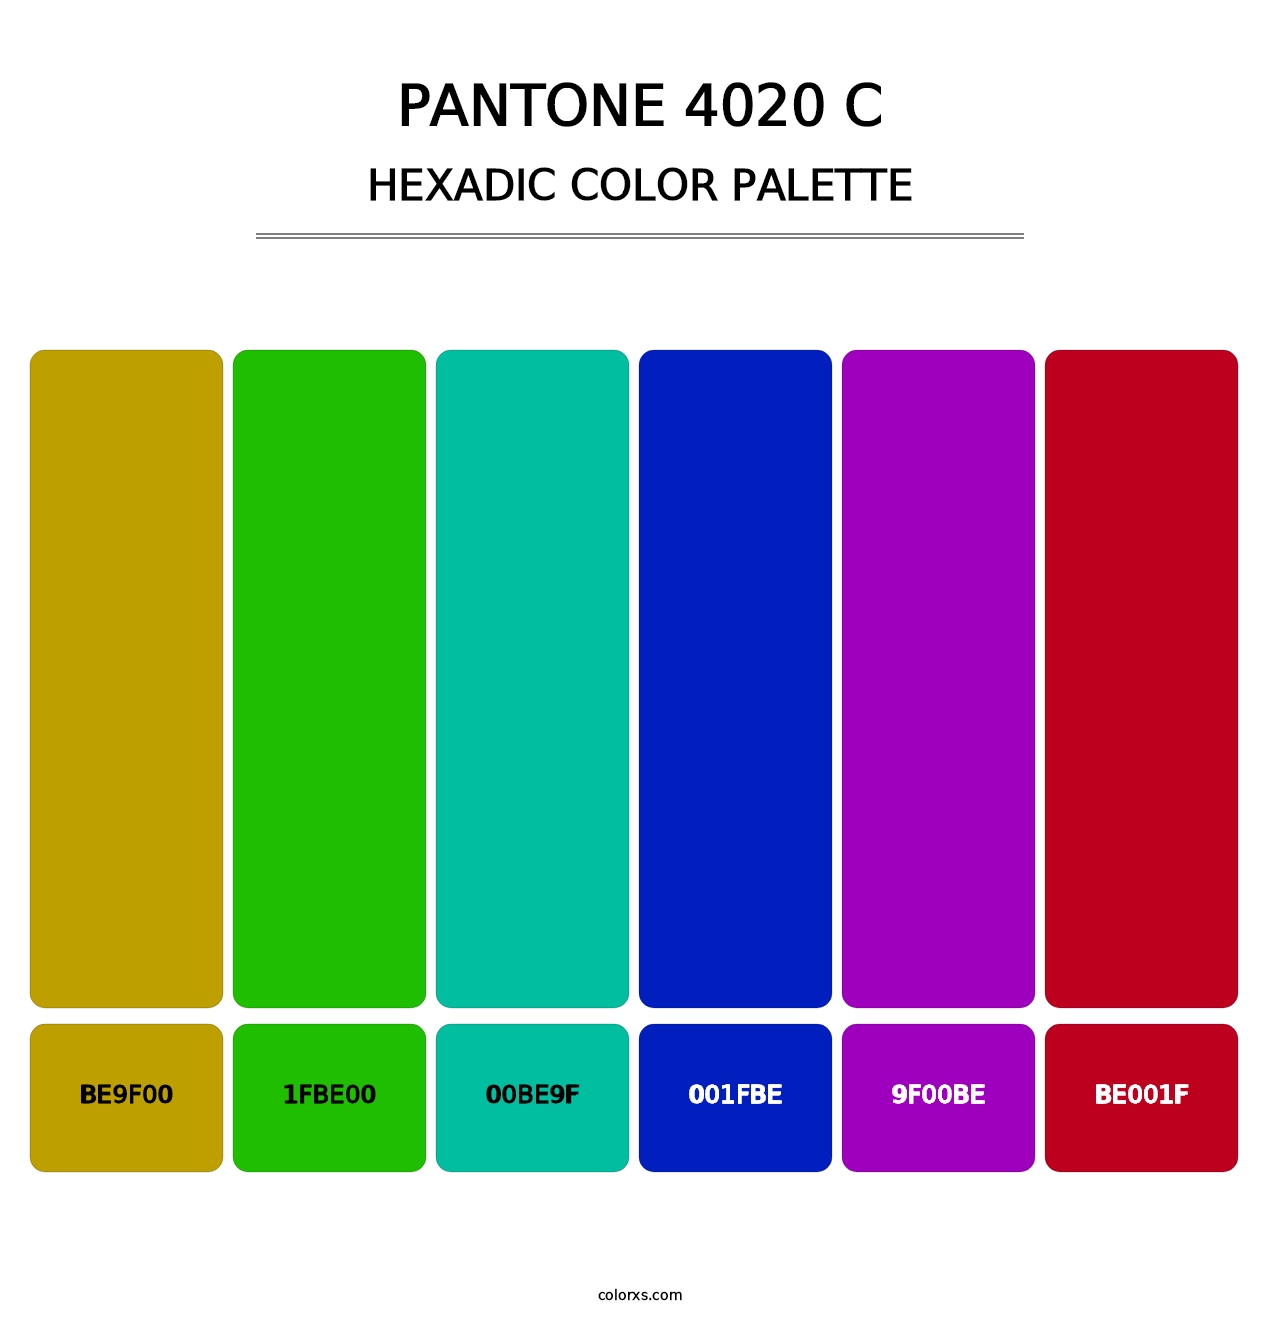 PANTONE 4020 C - Hexadic Color Palette